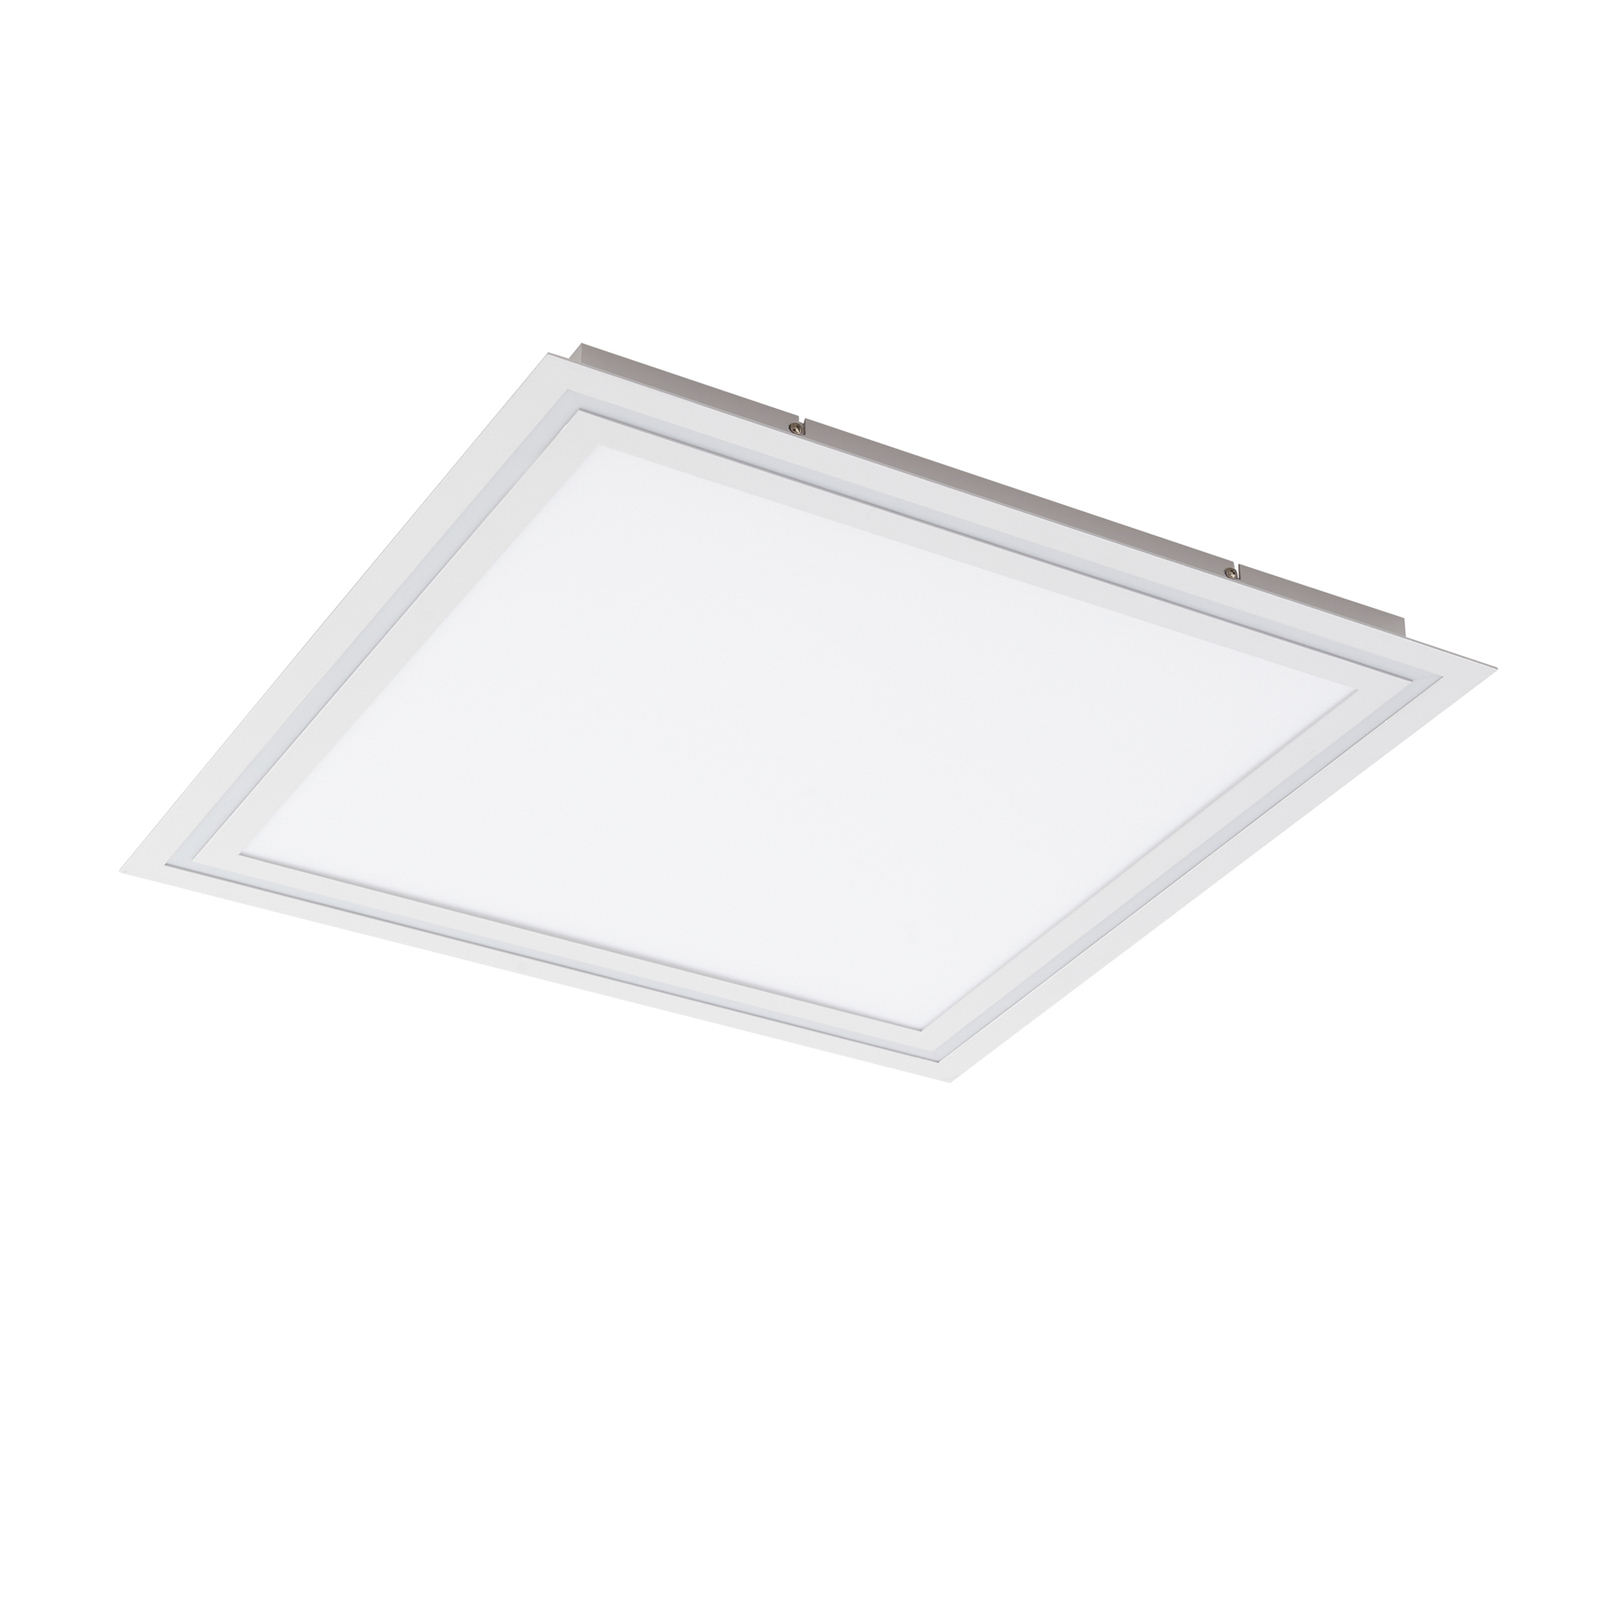 Lucande Plafonnier LED Leicy, blanc, 64 cm, RVB, CCT